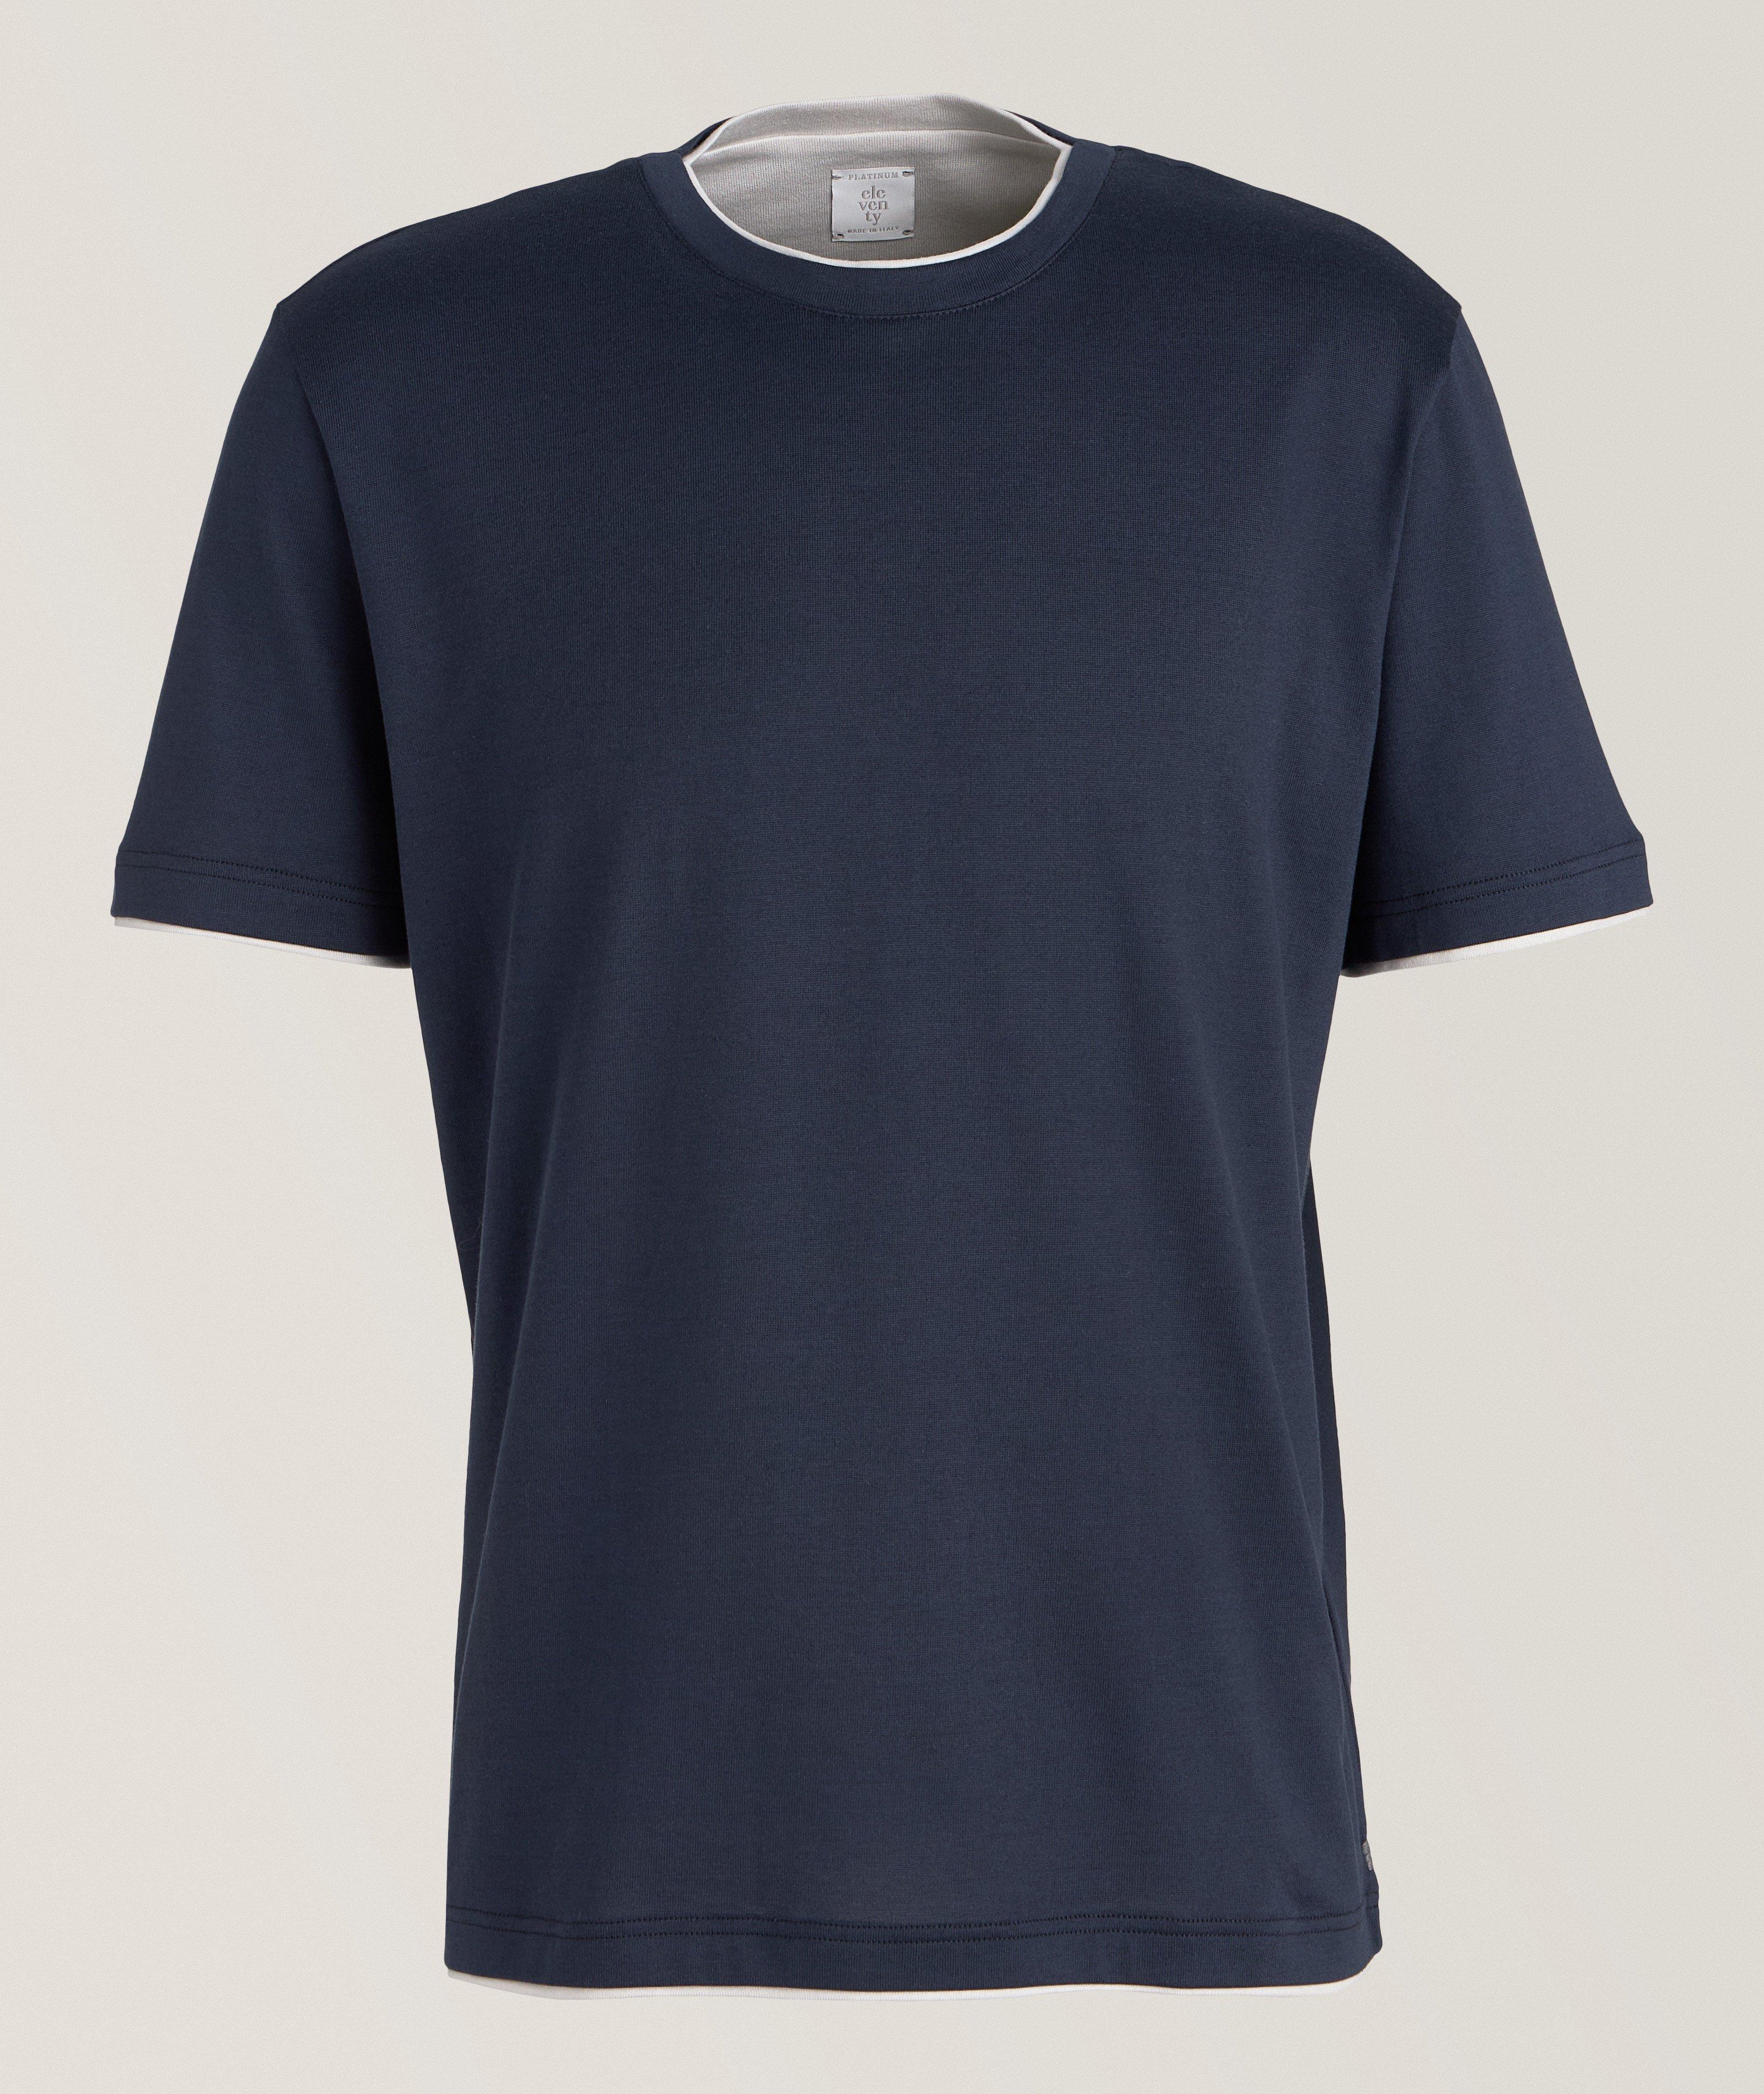 Tipped Giza Cotton T-Shirt  image 0